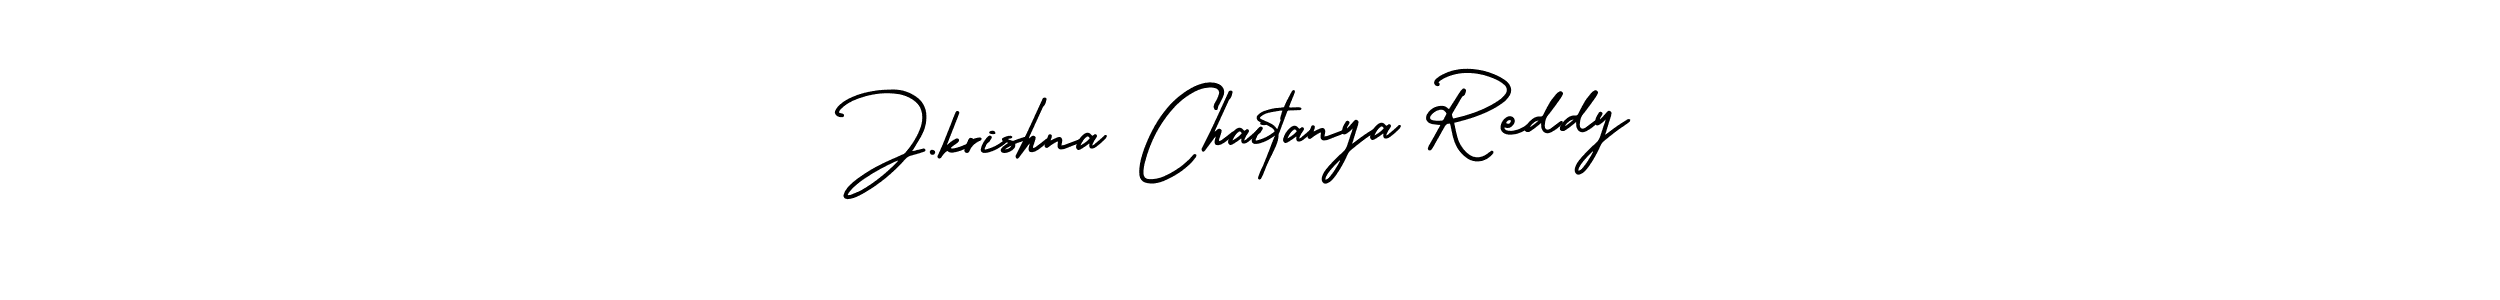 Best and Professional Signature Style for J.krishna Chaitanya Reddy. AmerikaSignatureDemo-Regular Best Signature Style Collection. J.krishna Chaitanya Reddy signature style 3 images and pictures png